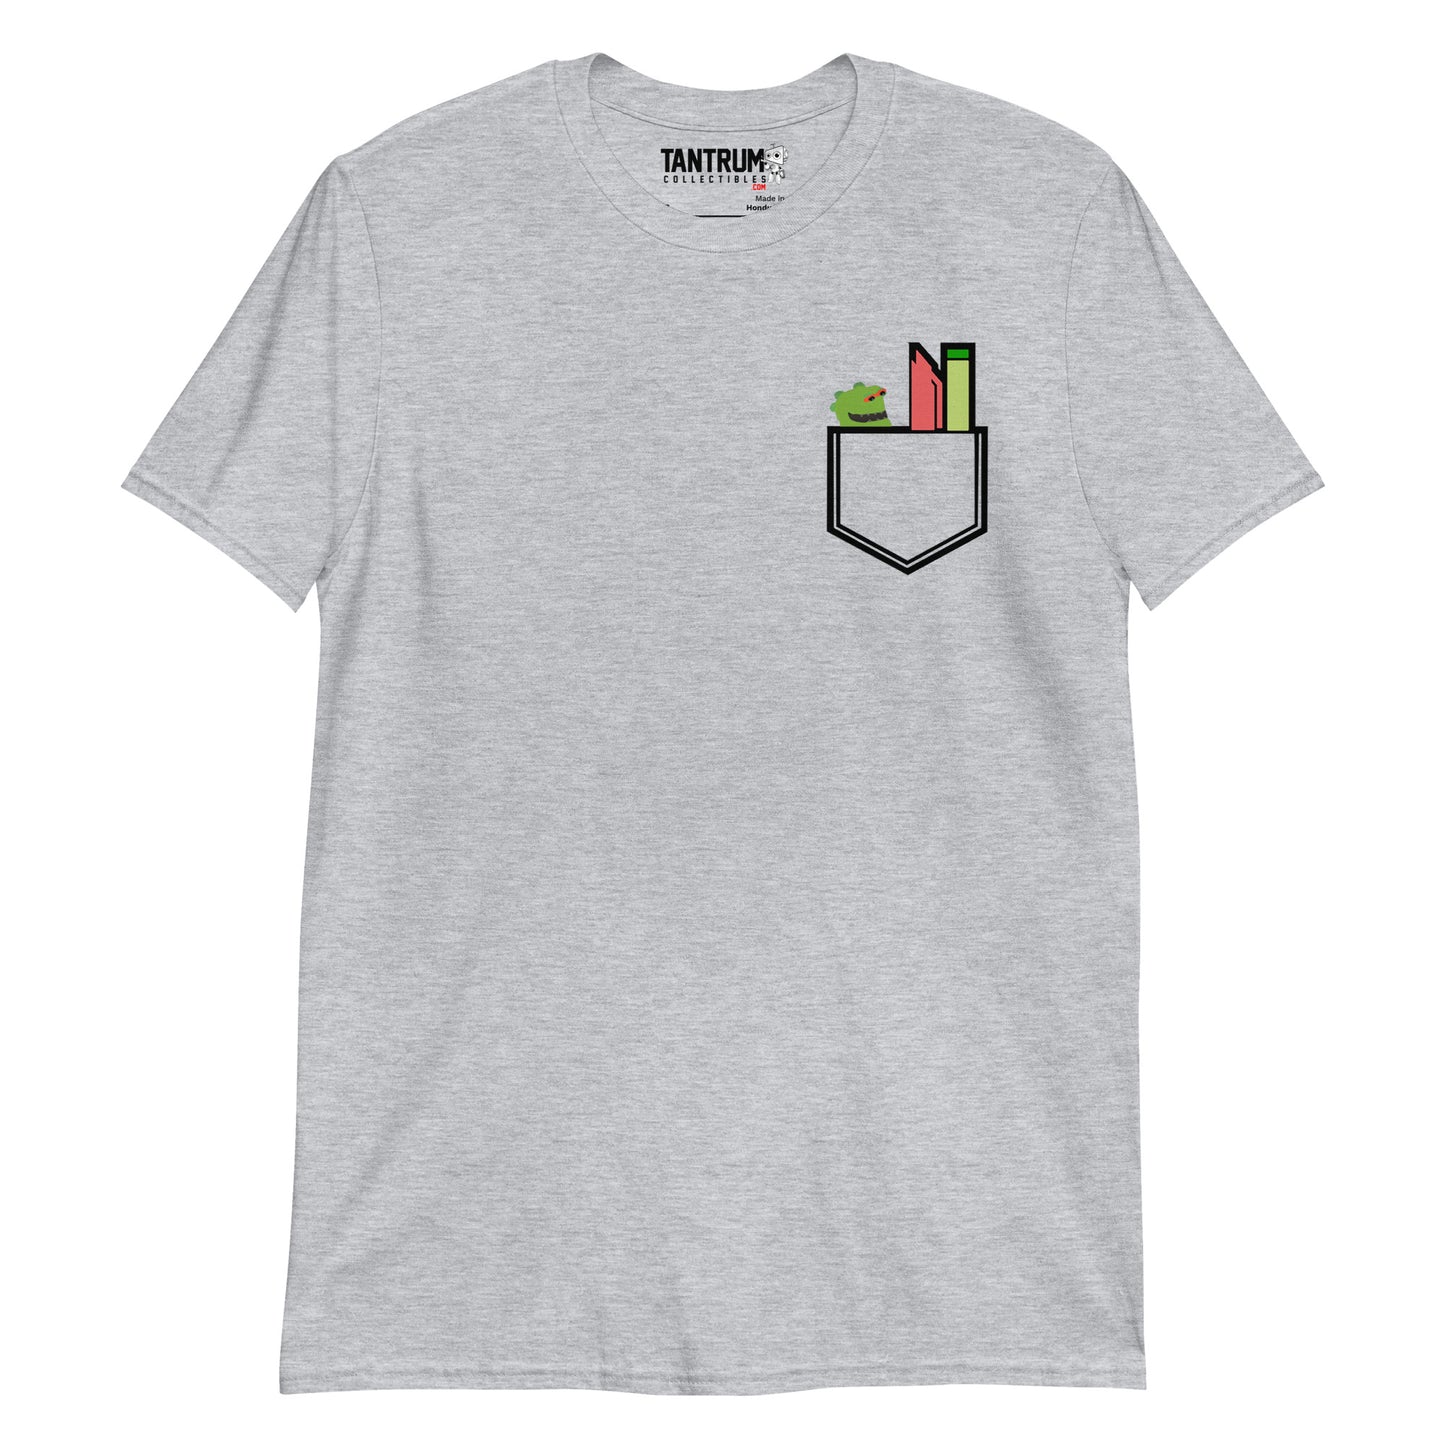 Trikslyr - Unisex T-Shirt -Printed Pocket Rawr Nerd